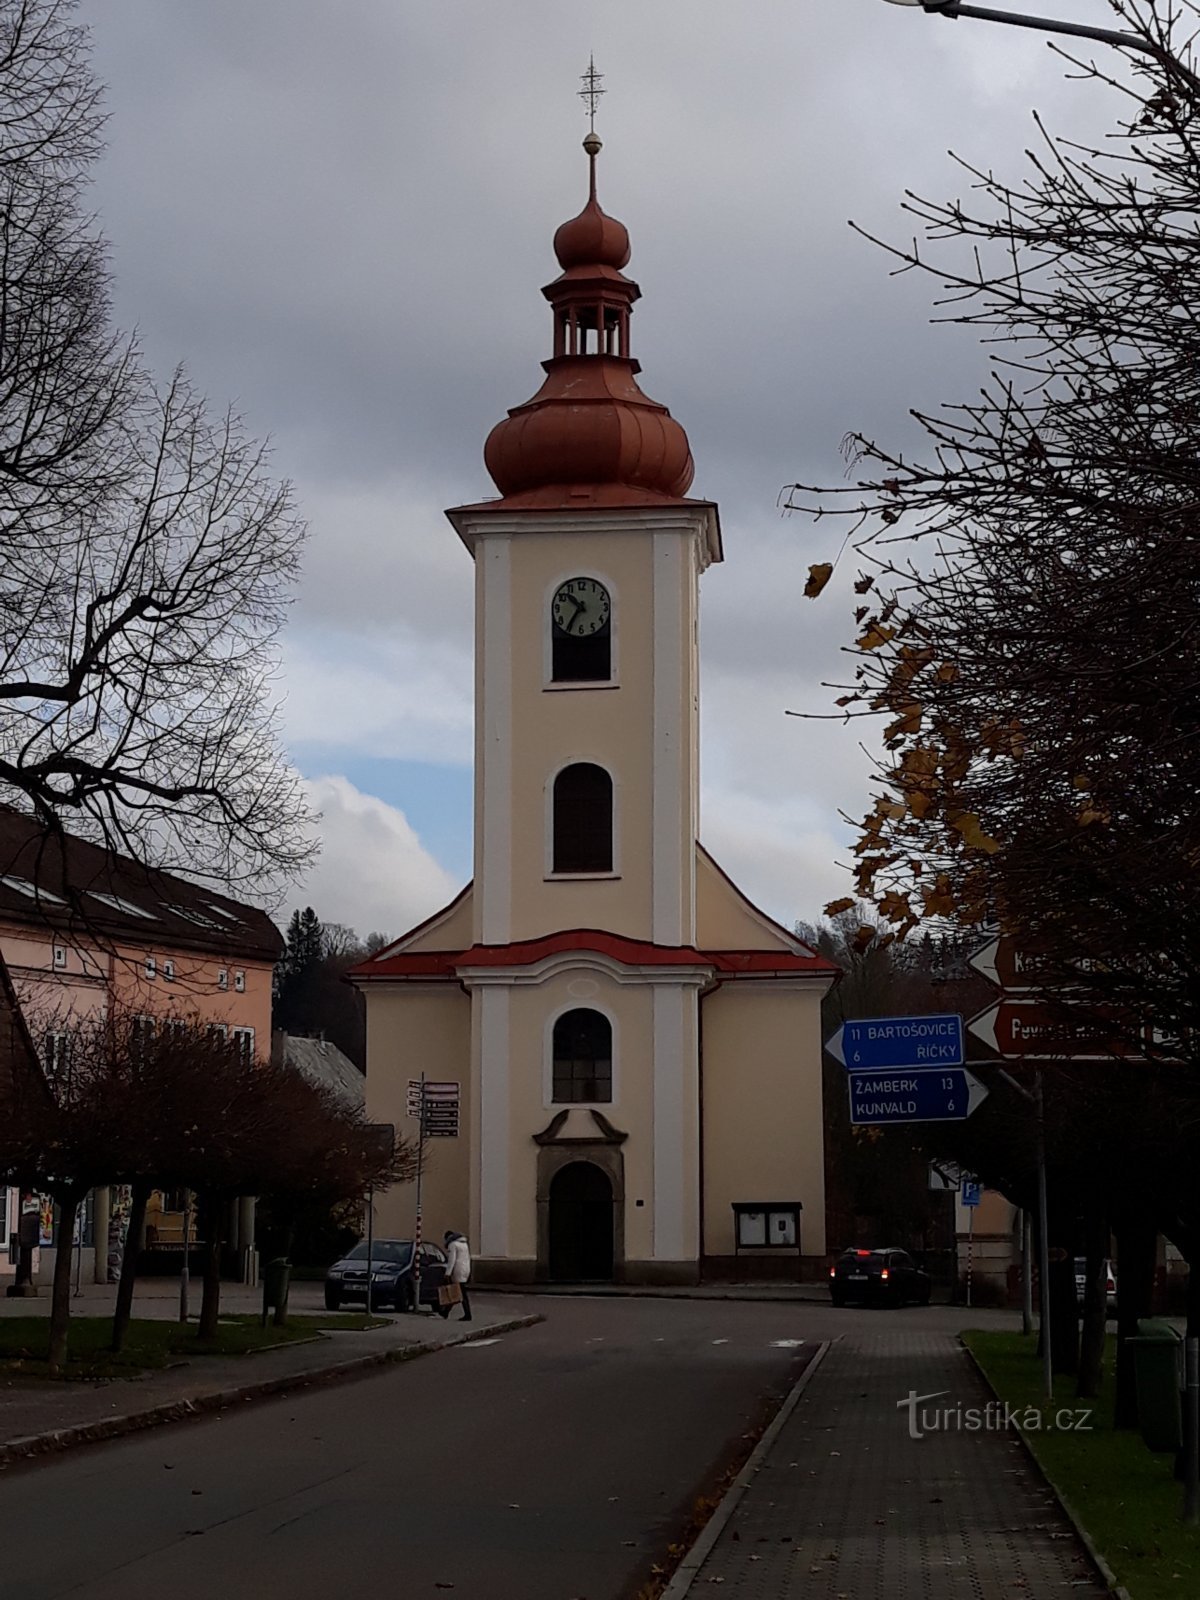 Orlické Hory の Rokytnice - すべての聖人の教会